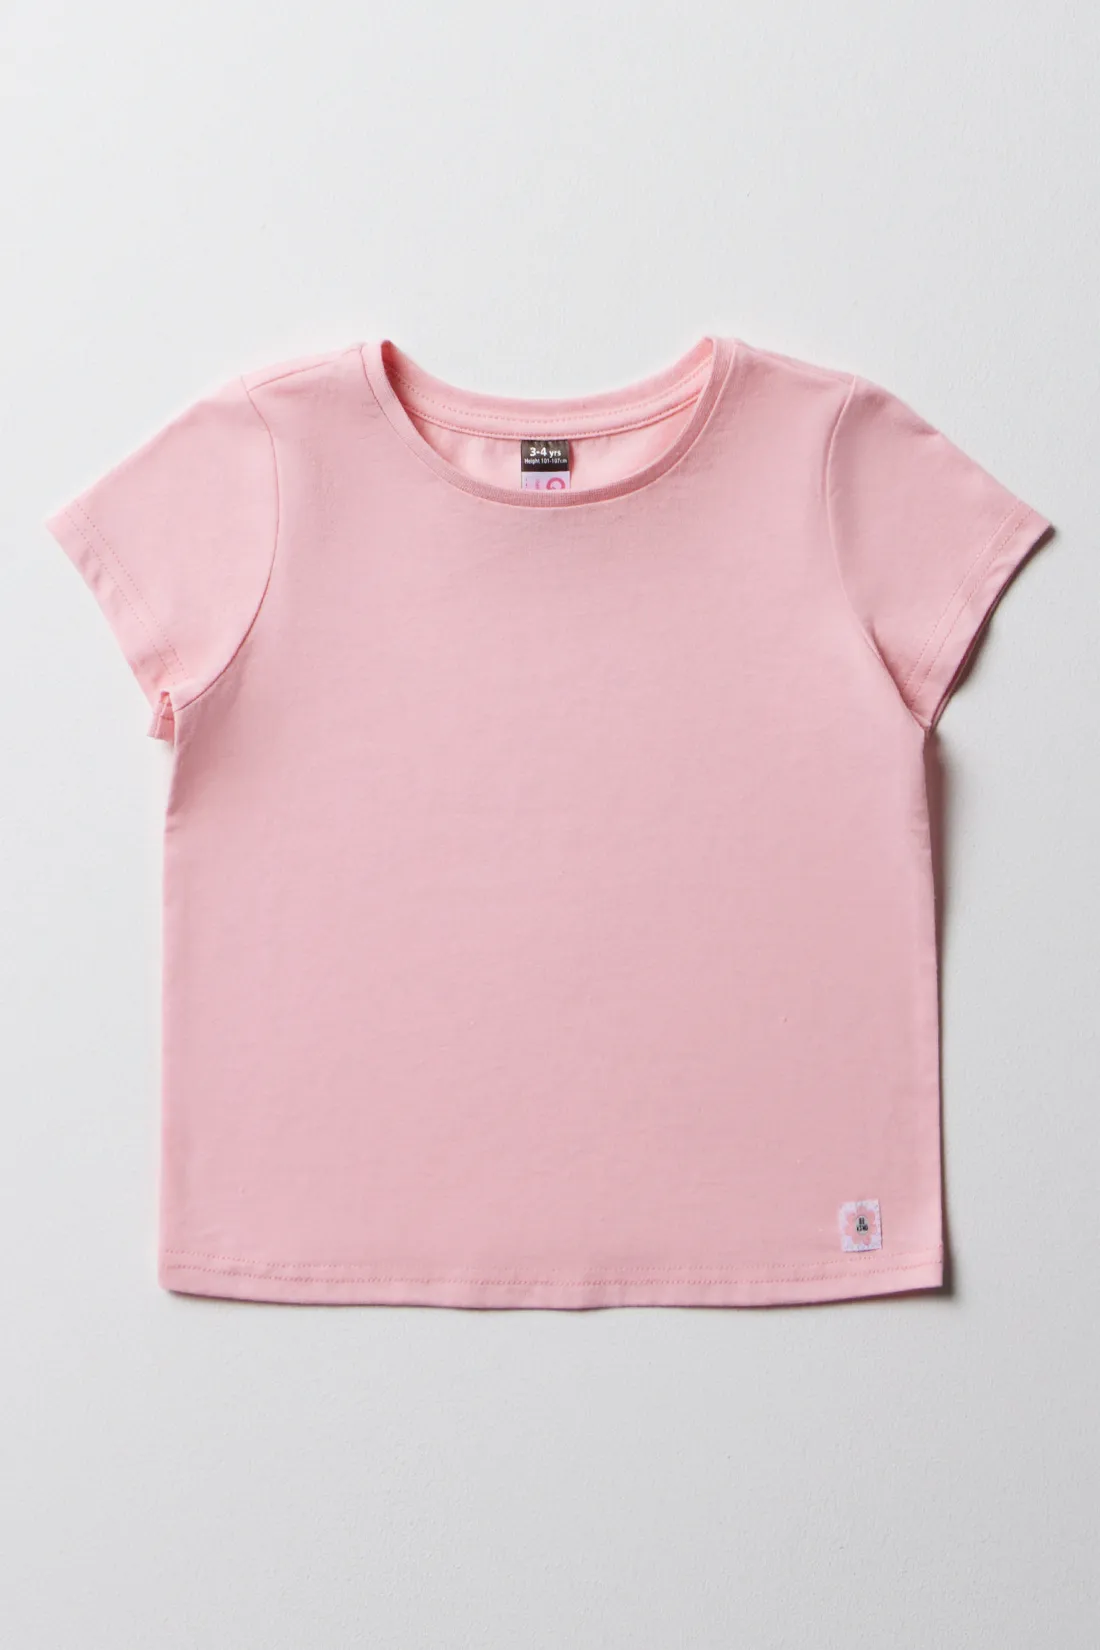 DUSTY PINK SS TSHIRTS - GIRLS 2-8 YEARS Tops & T-Shirts | Ackermans